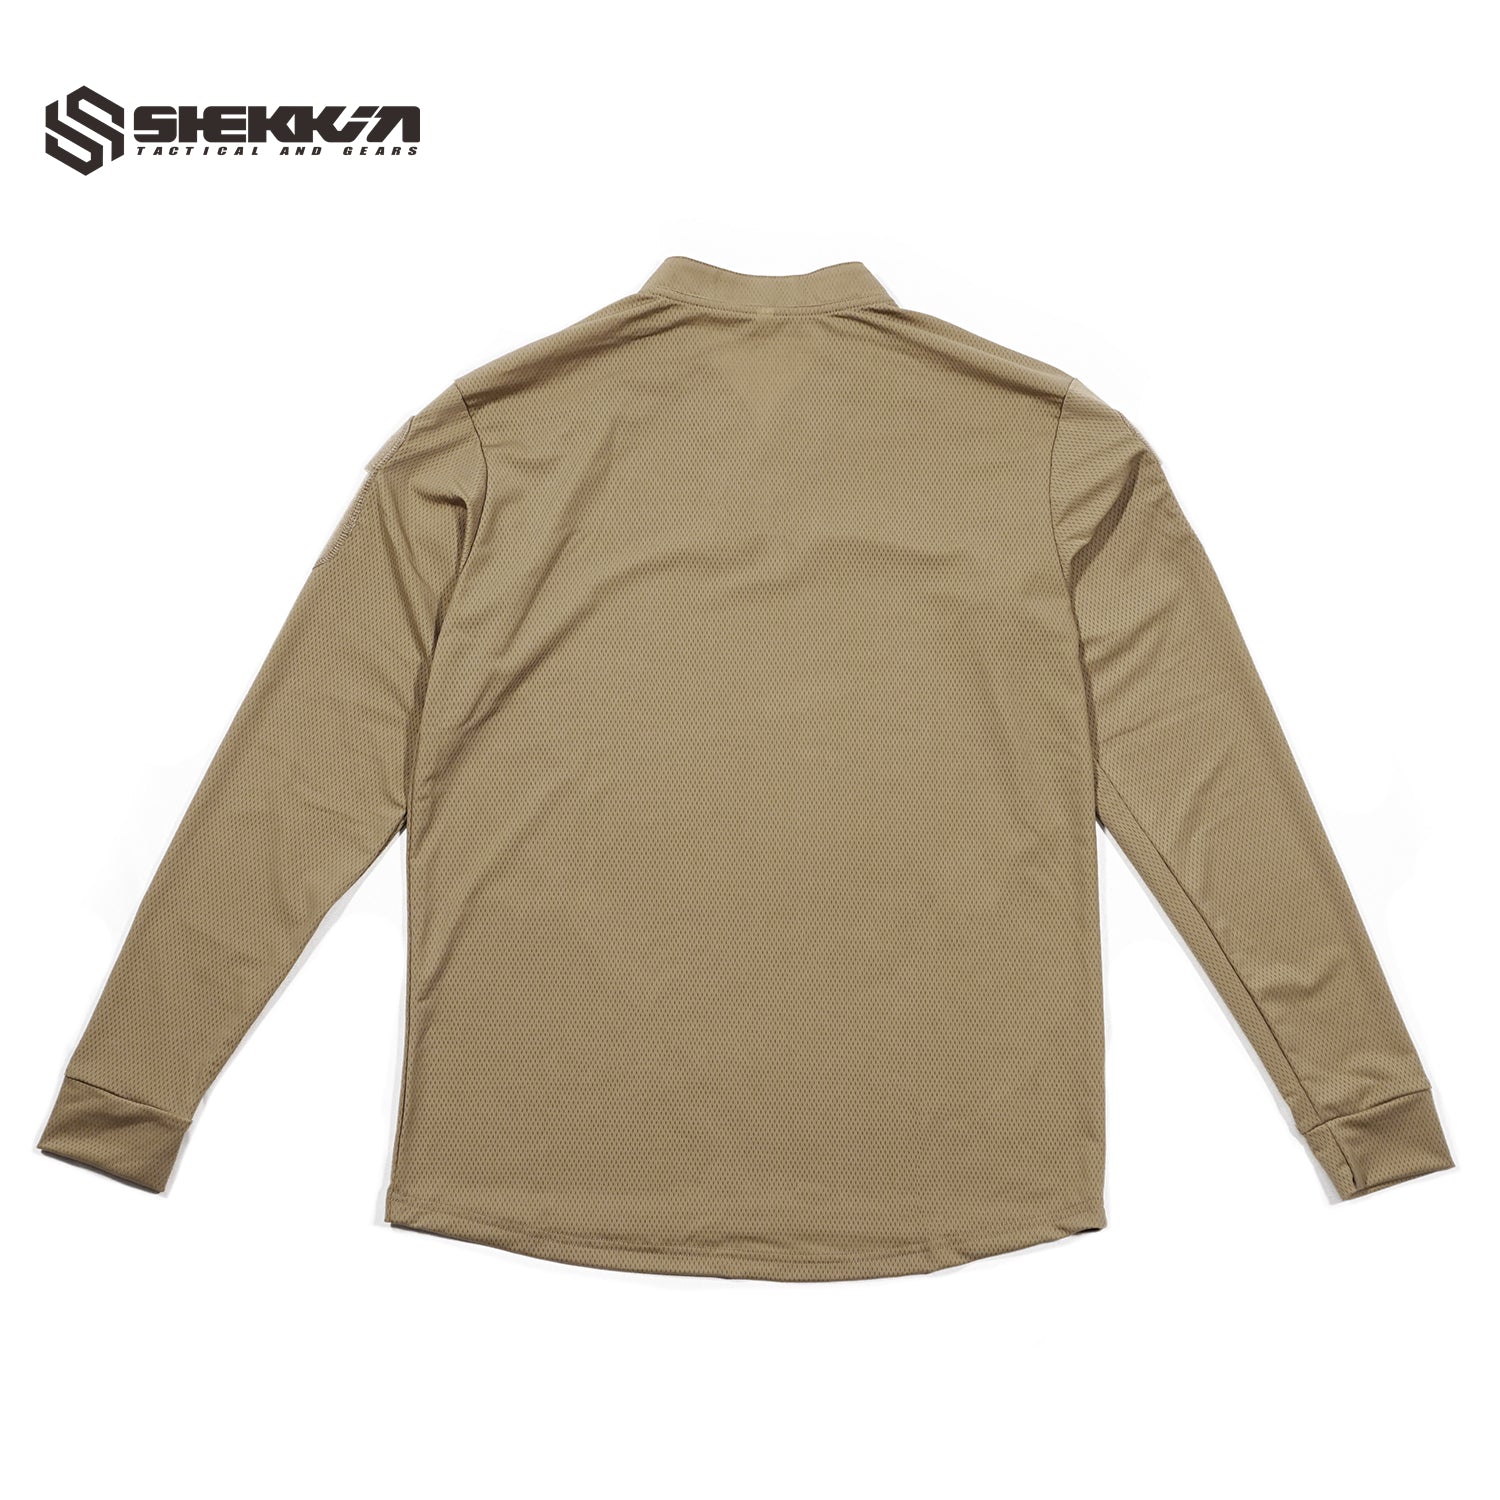 Velocity style BOSS Rugby Shirt long sleeves - Shekkin Gears